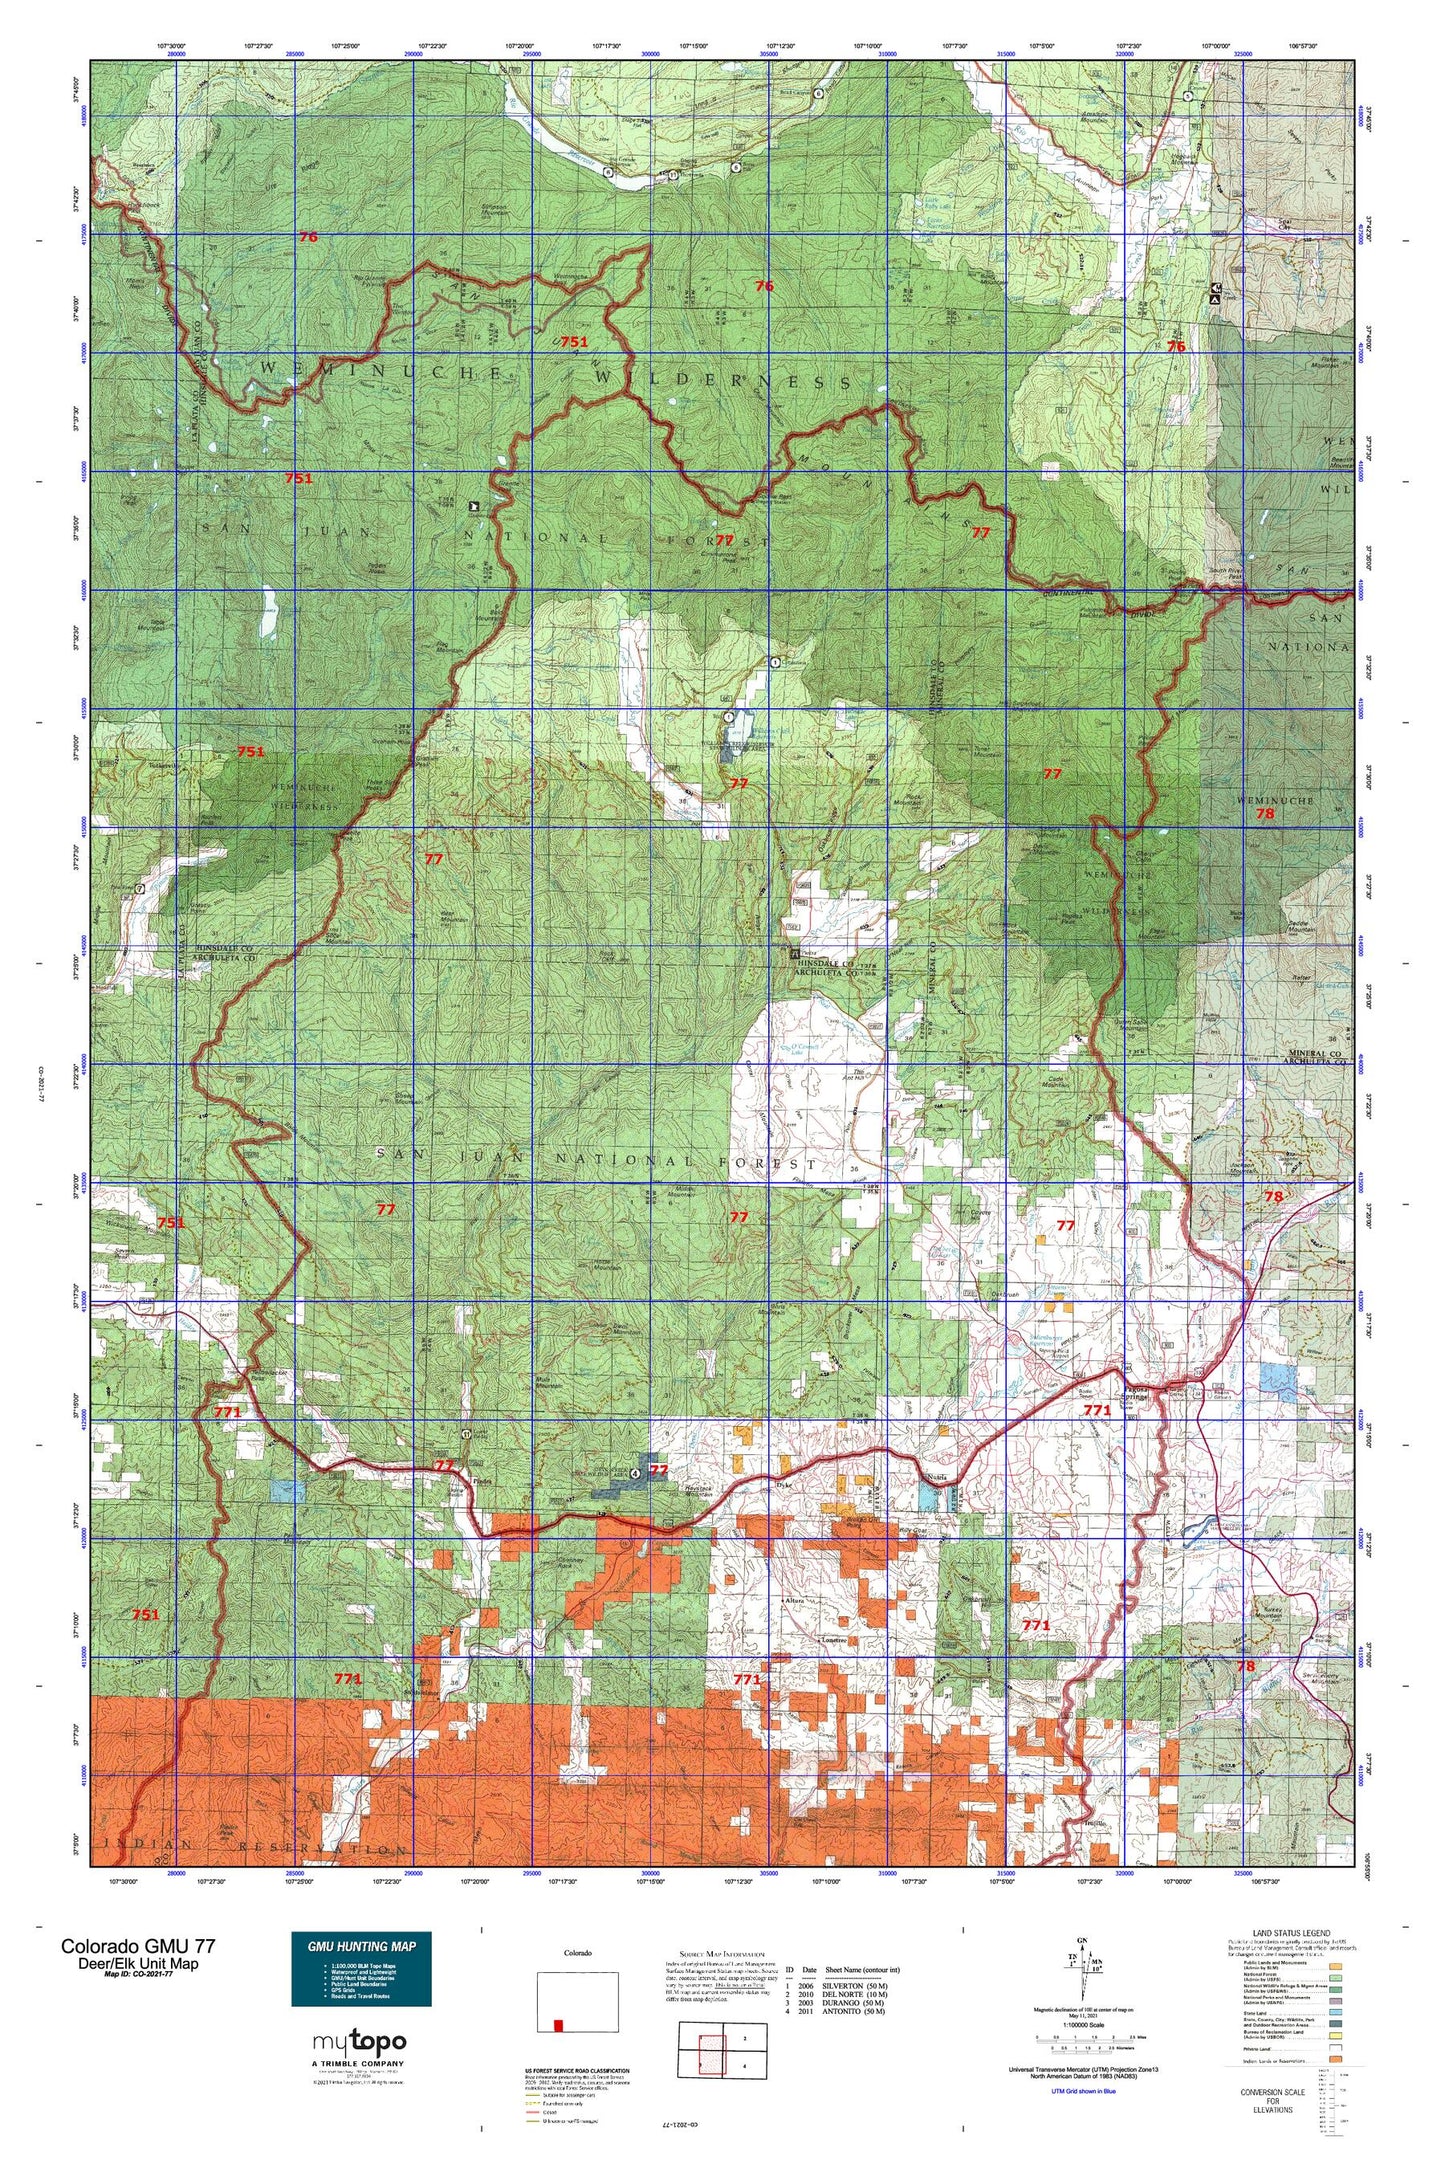 Colorado GMU 77 Map Image